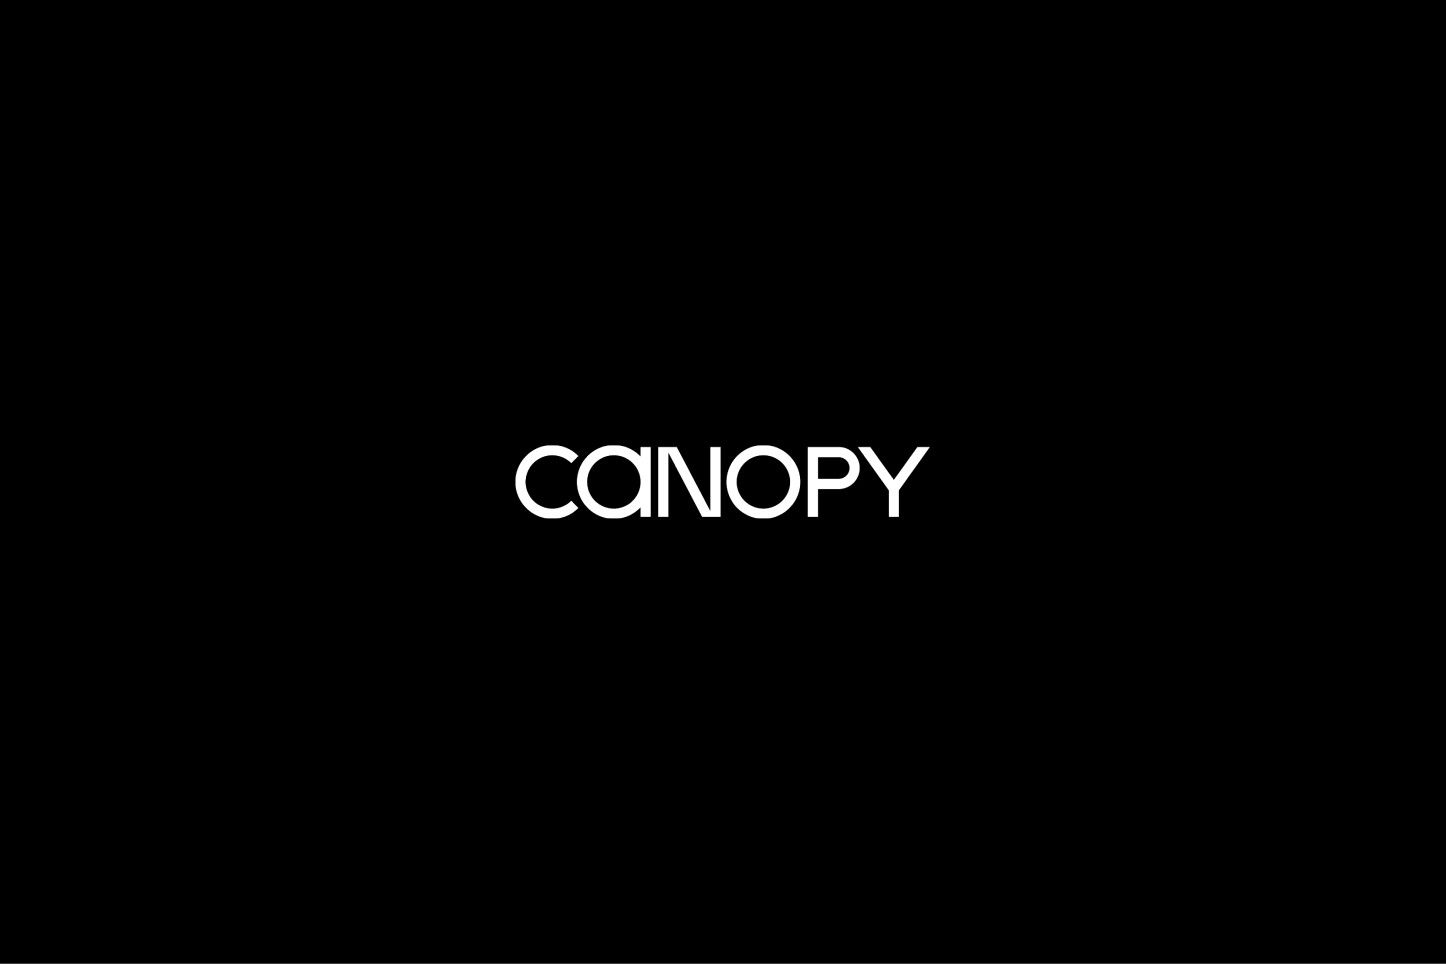 canopy text wordmark